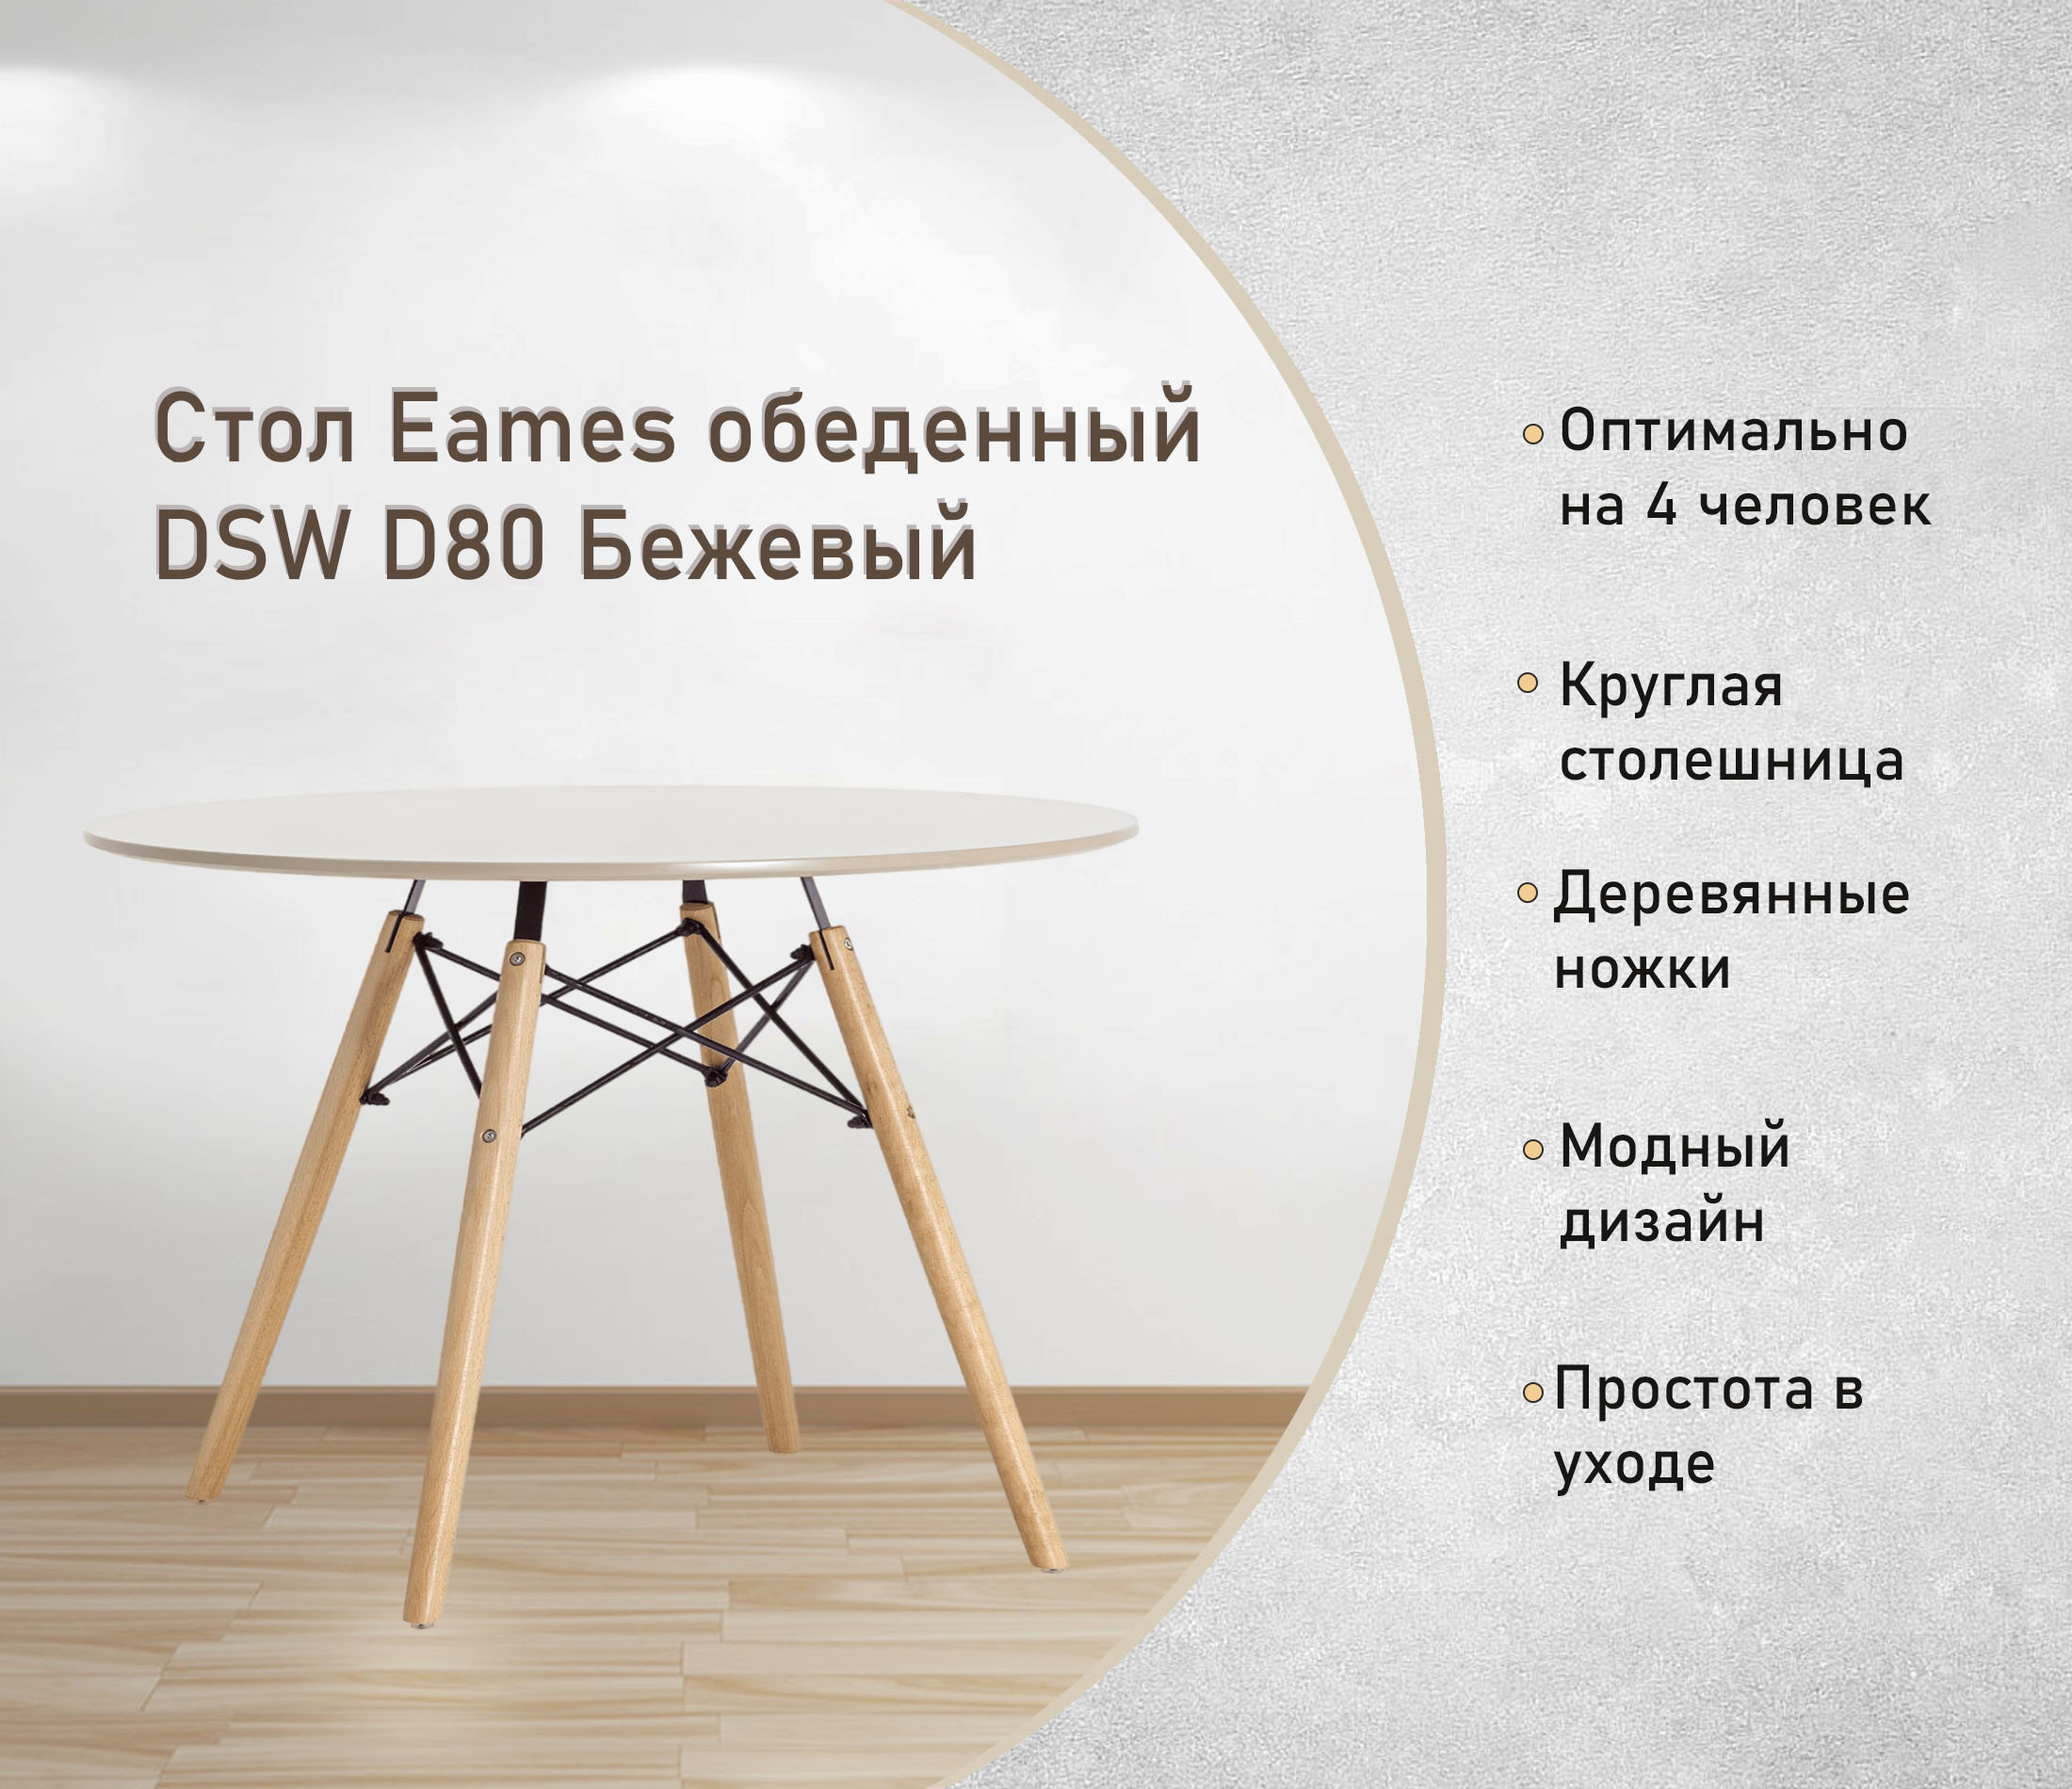 Стол обеденный DSW D80 Бежевый круглый